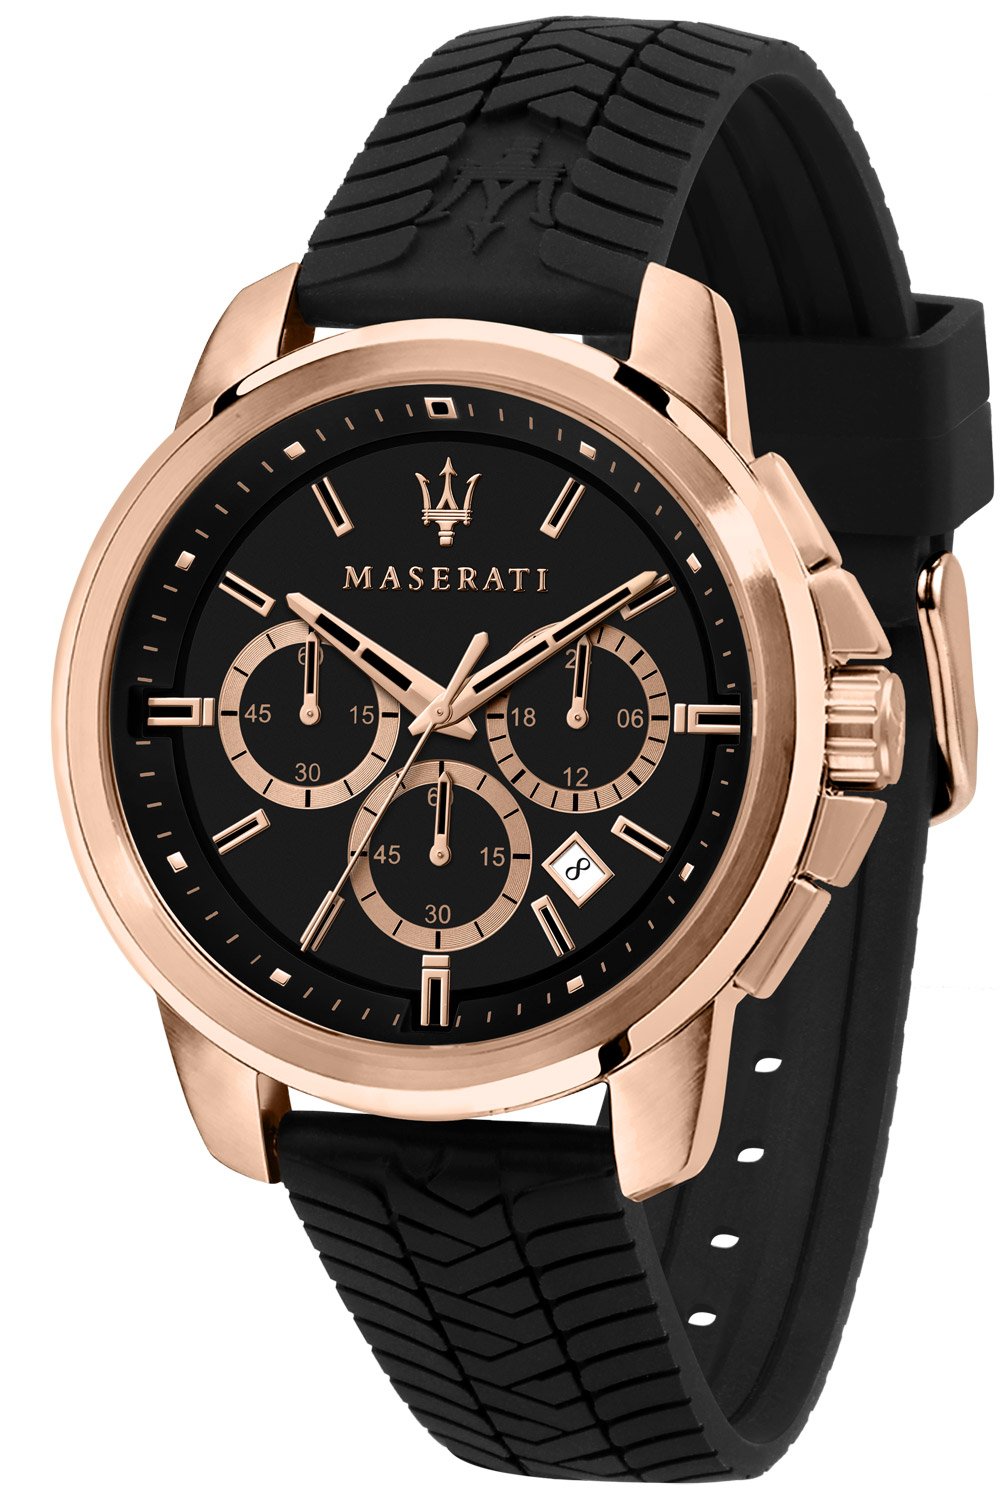 Maserati Herrenuhr Chronograph Successo R8871621012 schwarz/roségold • uhrcenter